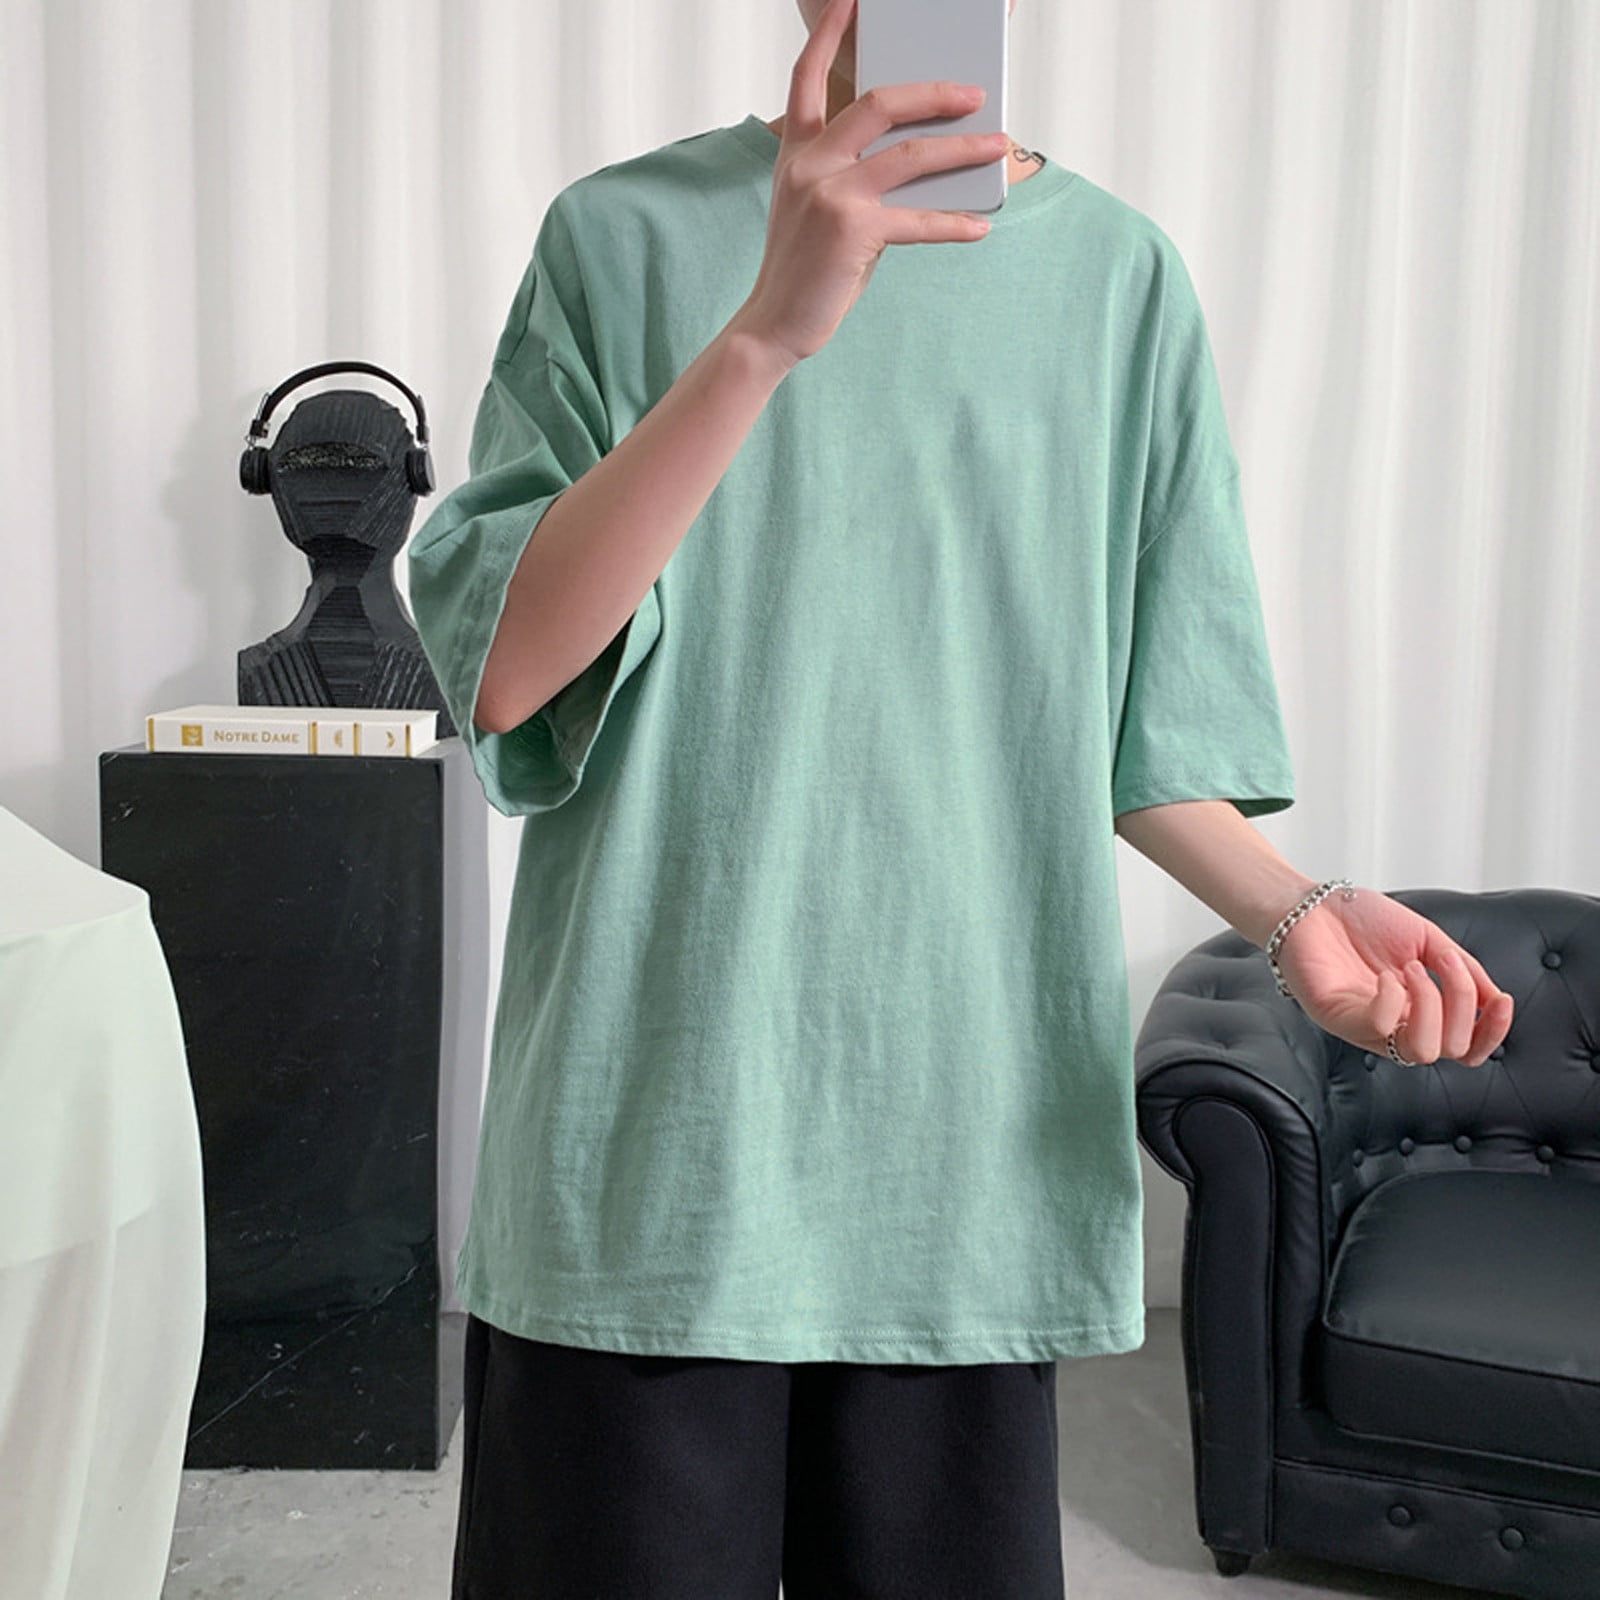  YSJZBS Mens T Shirts Casual,Super Cheap Stuff Under 1